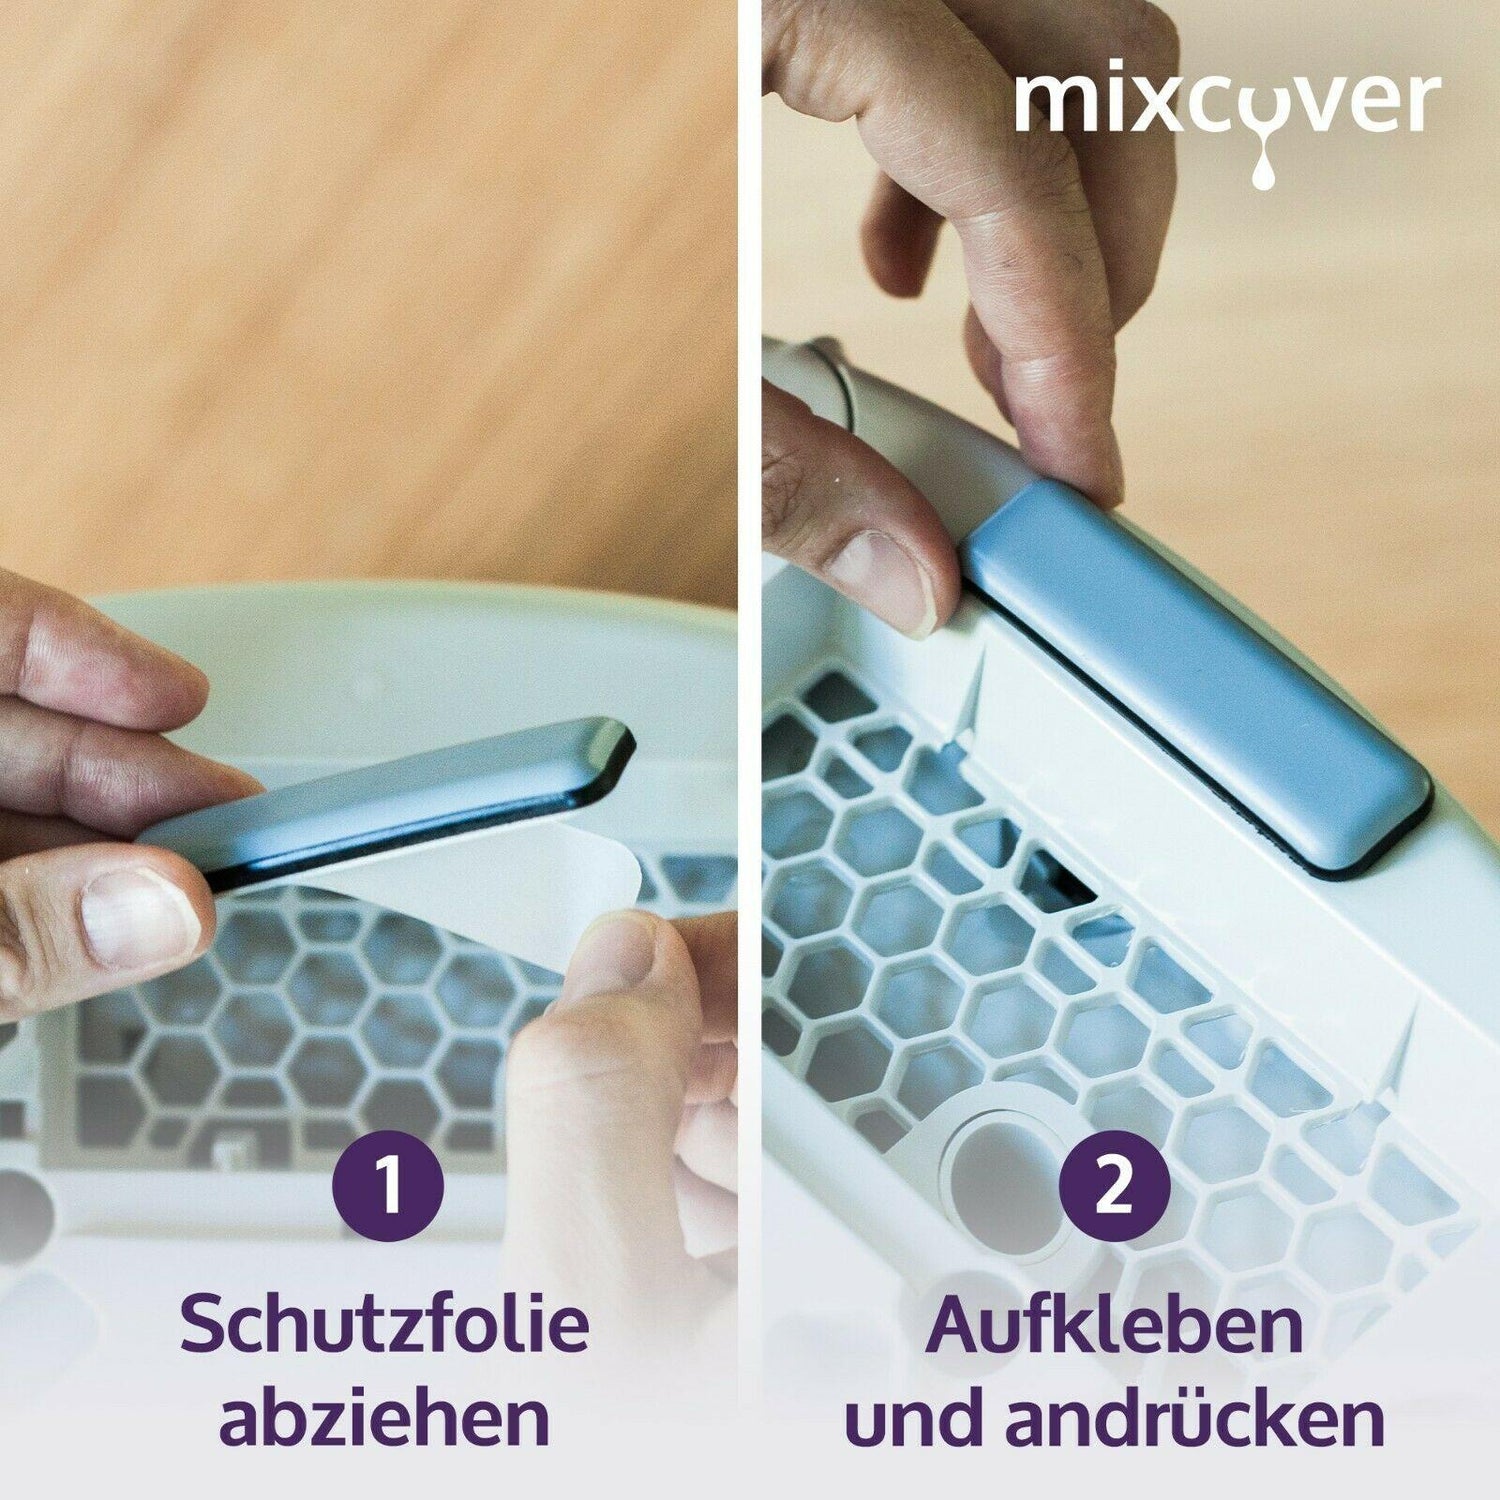 mixcover unsichtbare Gleiter/Slider für den Thermomix TM6 & TM5 1er Set - Mixcover - Mixcover